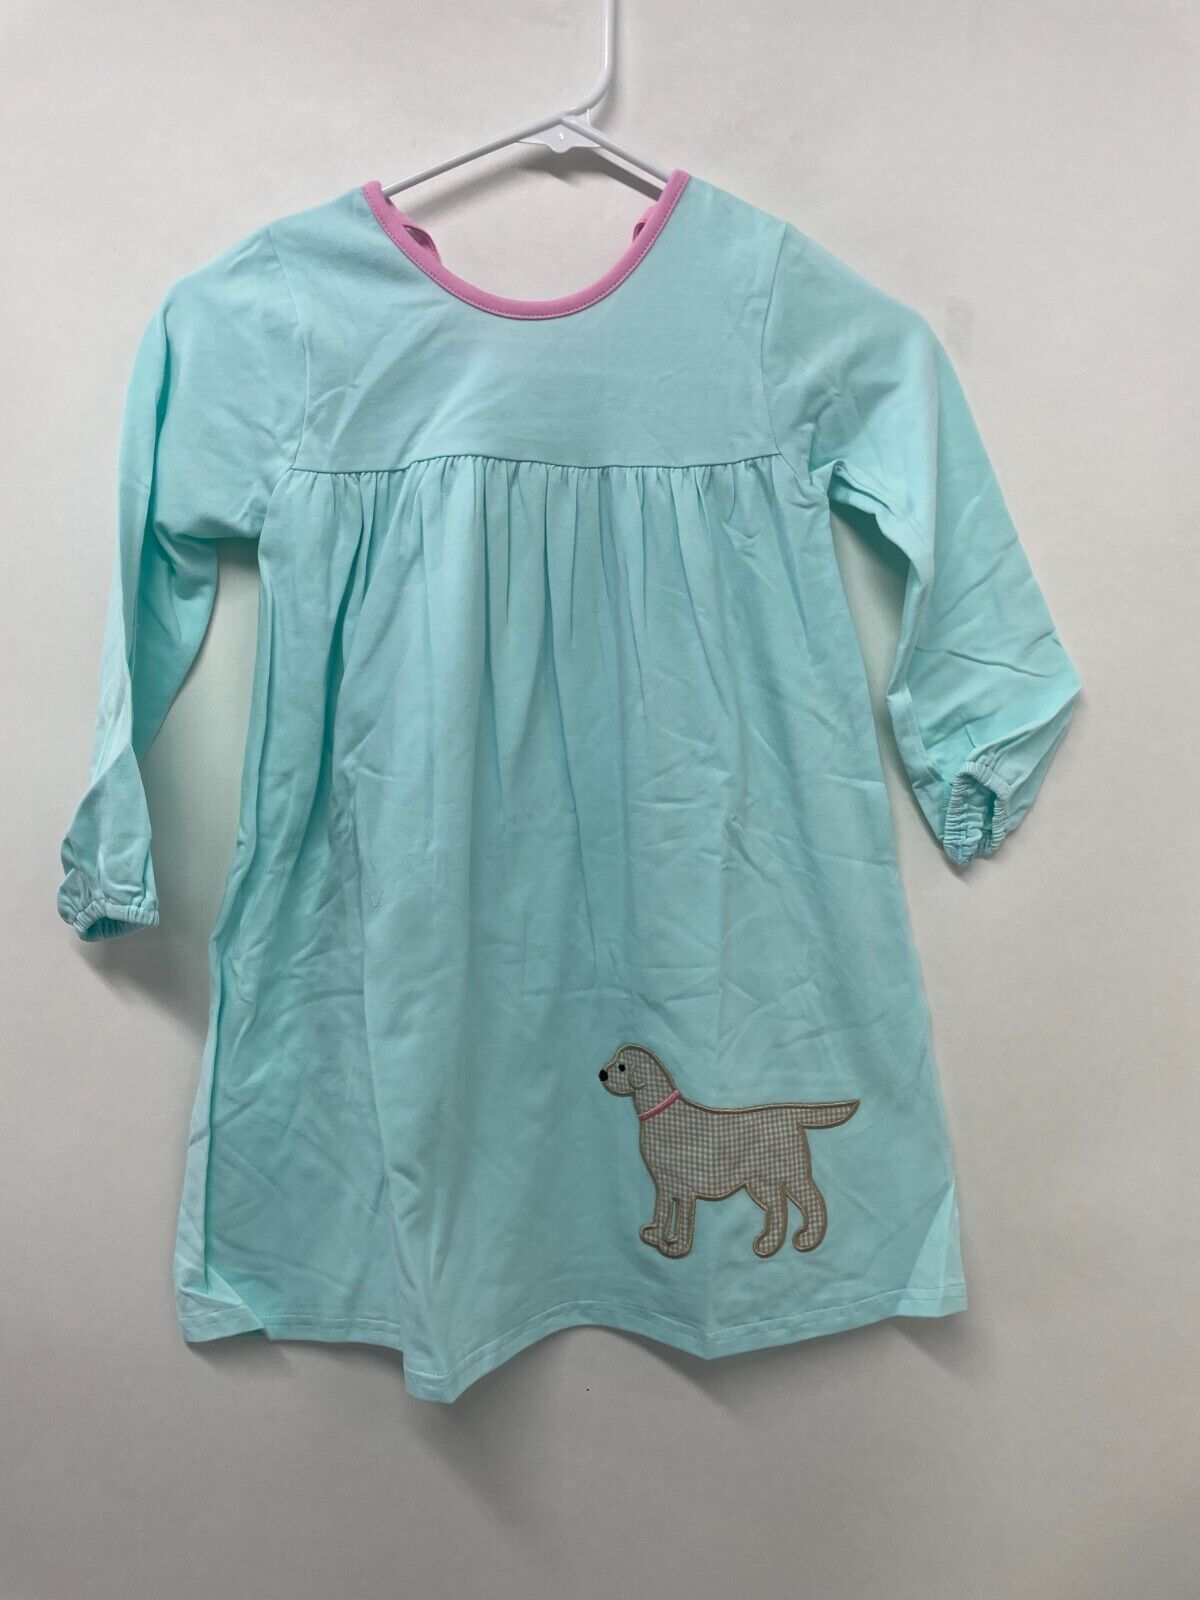 Stitchy Fish Girls 6 Blue Girl's Best Friend Applique Dress Mint Green 81332 Dog